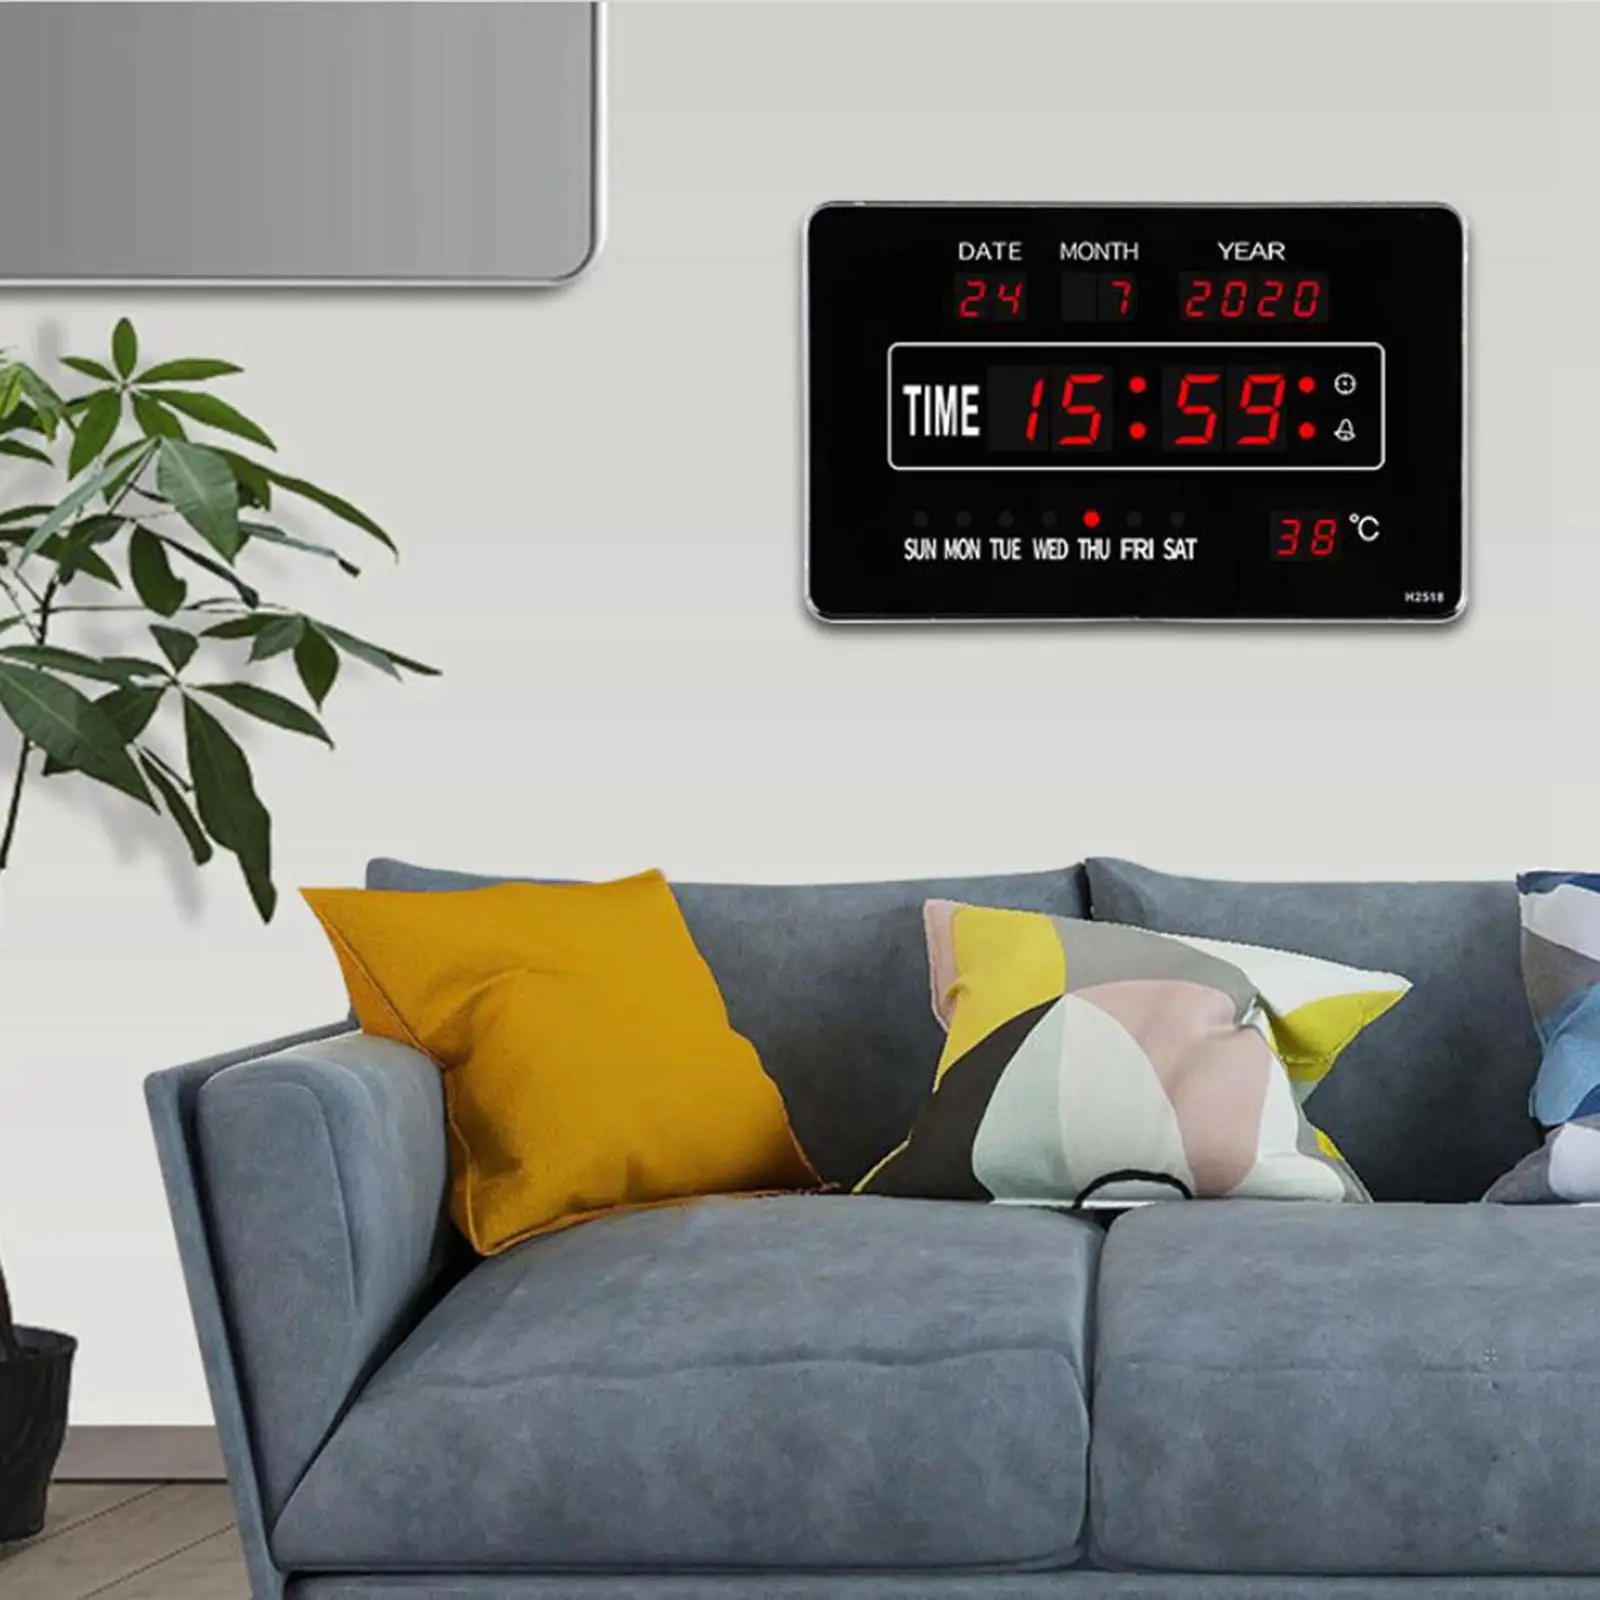  Display LED Digital Display Bedside Clock Easy to Read, Show Indoor Temperature